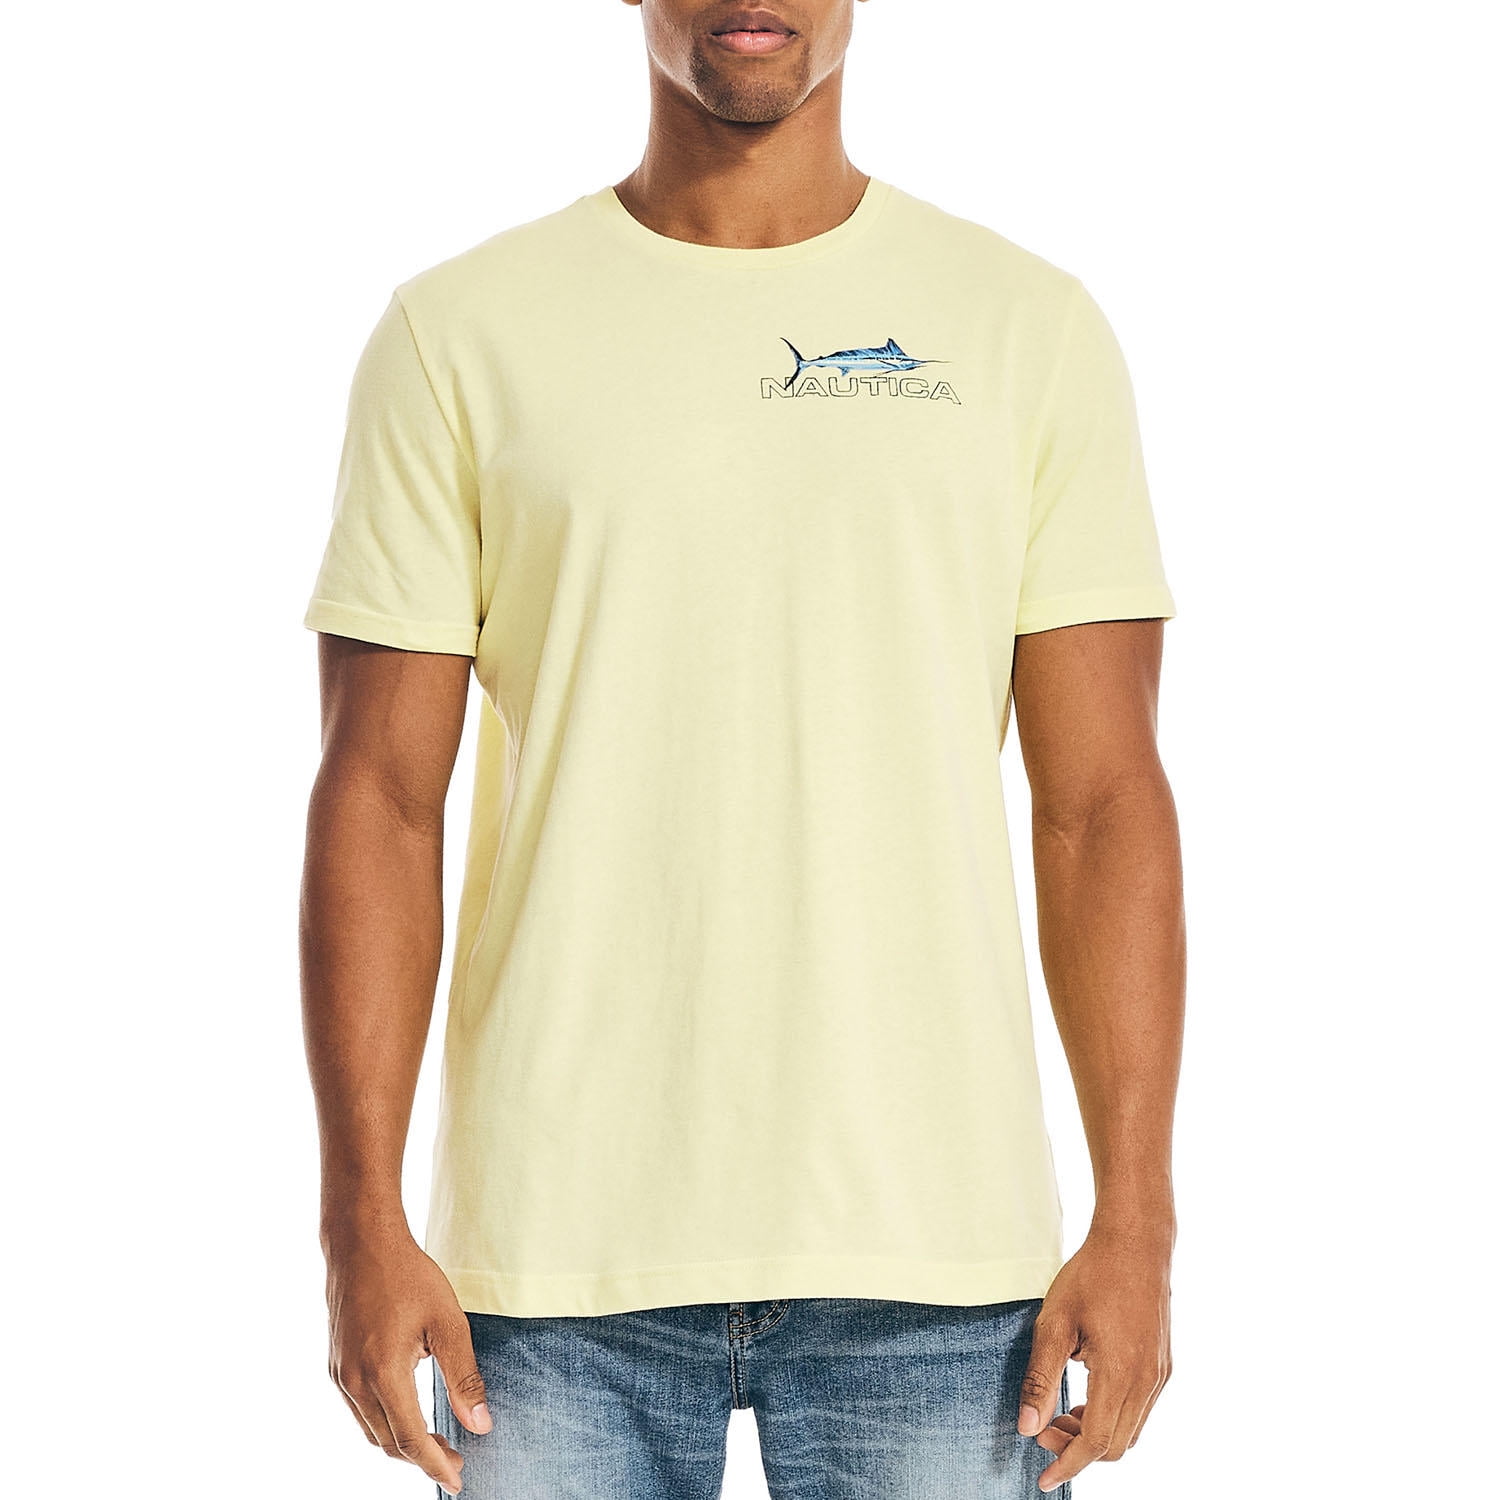 Nautica Men's Sailing Club Graphic T-Shirt Bright White, M - Shop Spring Styles